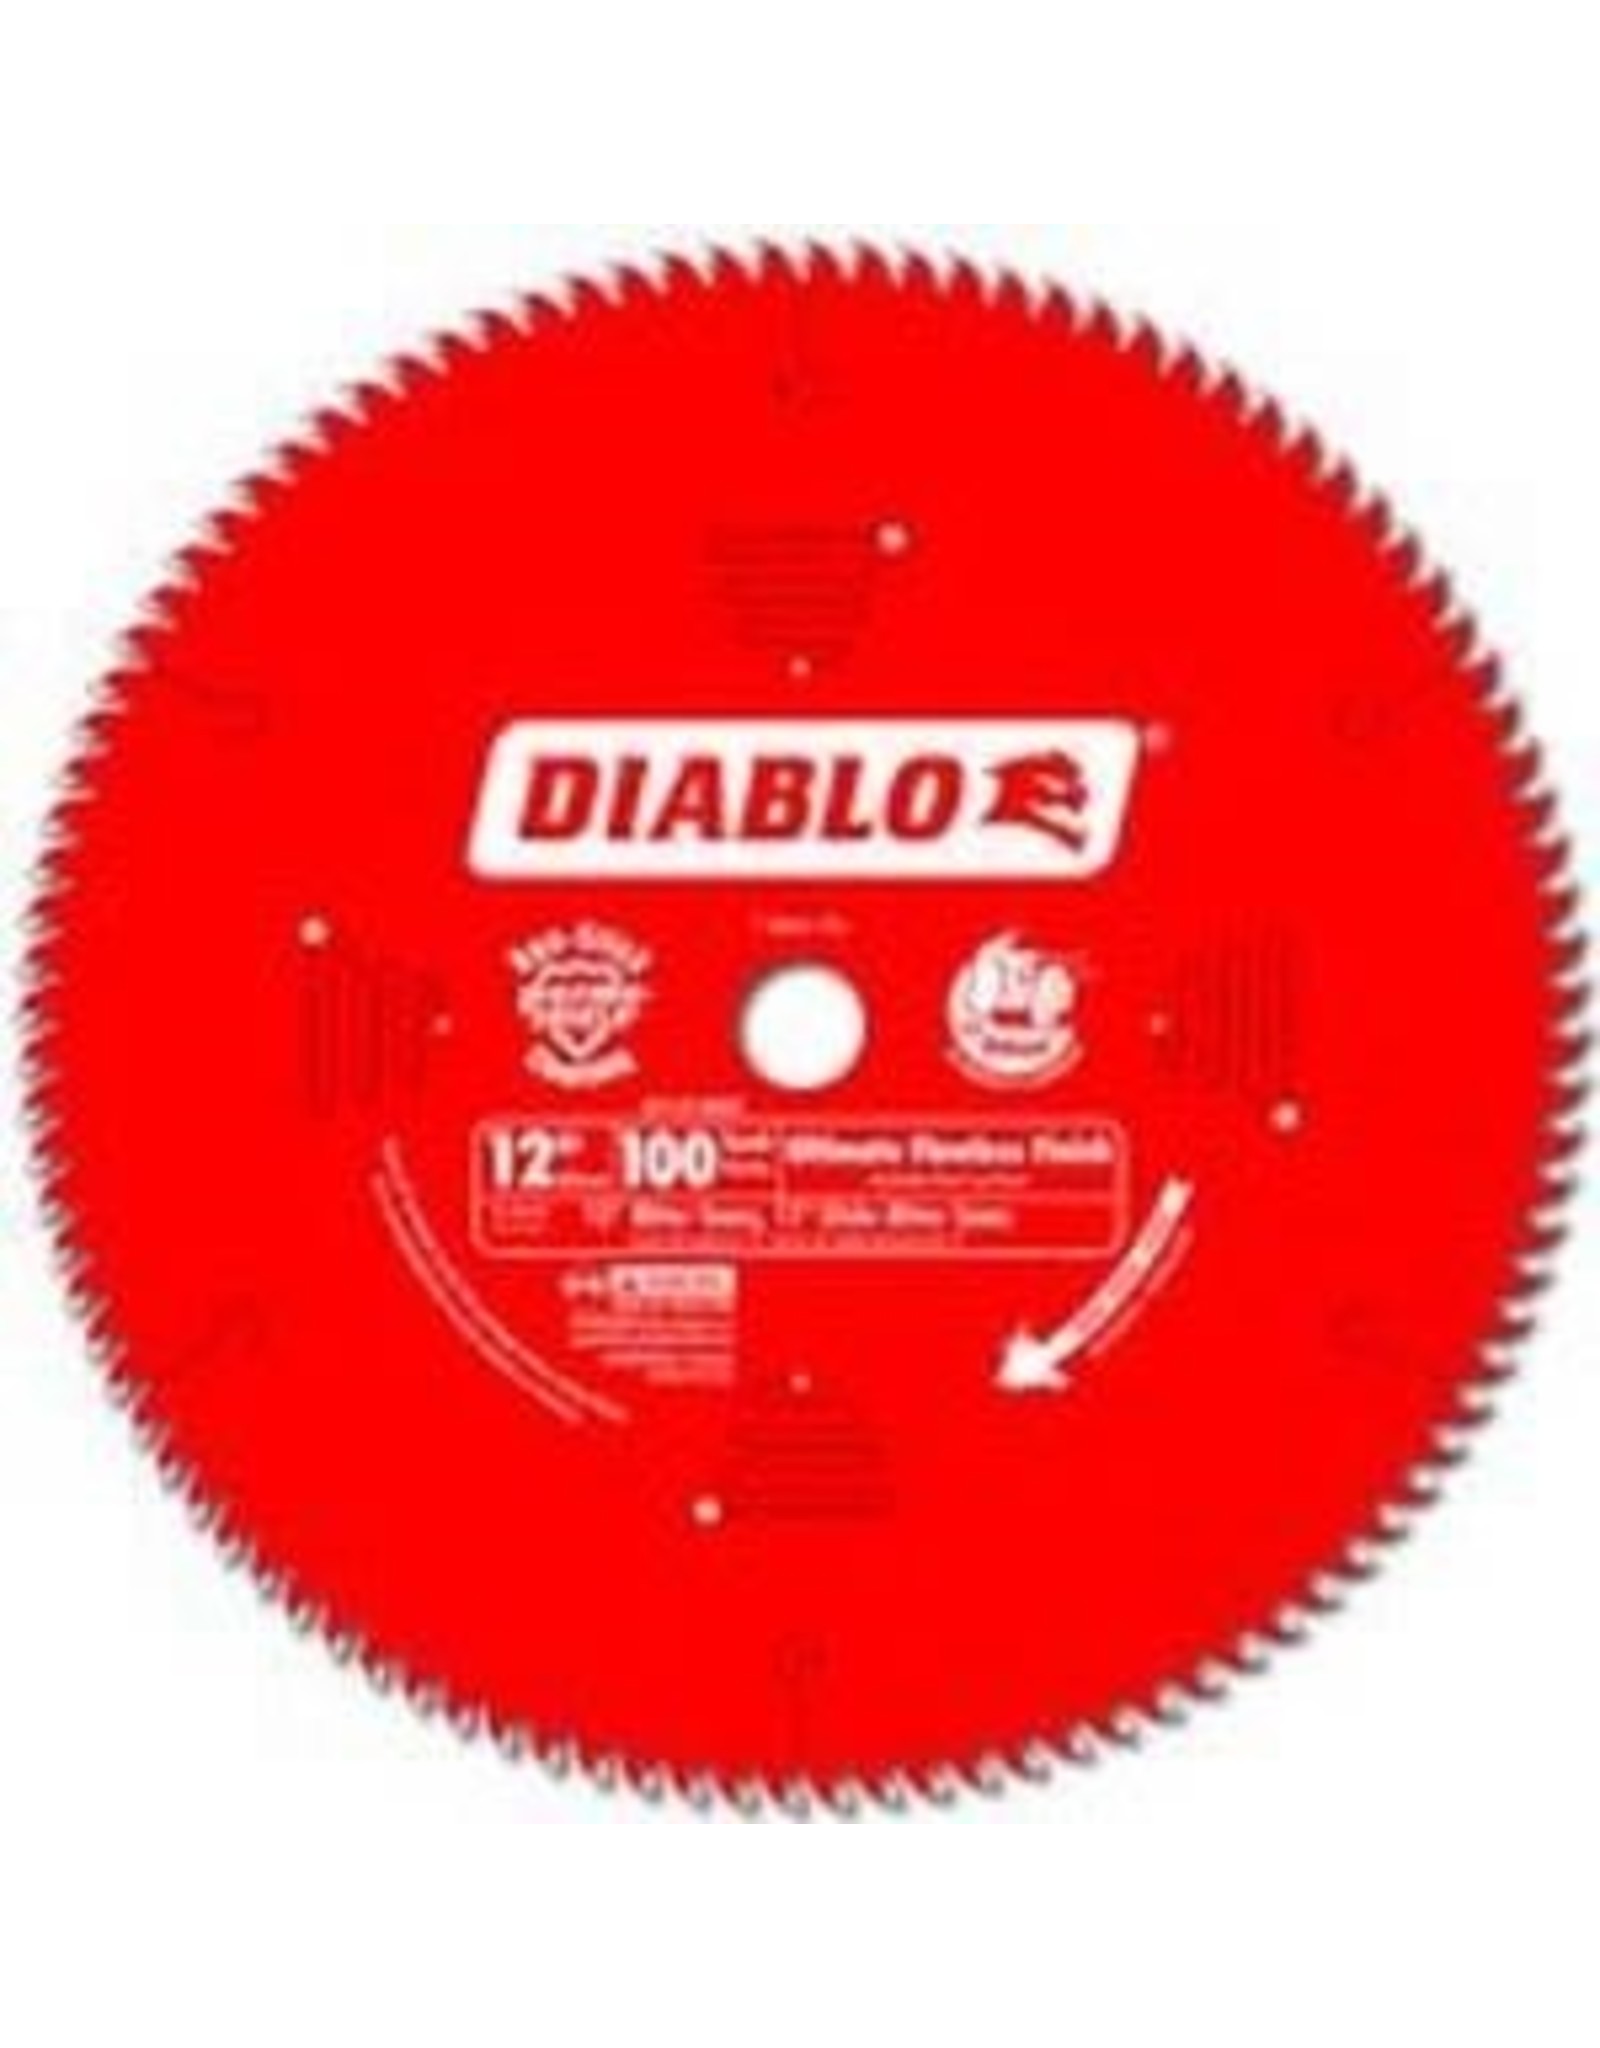 Diablo Diablo D12100X Circular Saw Blade, 12 in Dia, 1 in Arbor, 100-Teeth, Carbide Cutting Edge